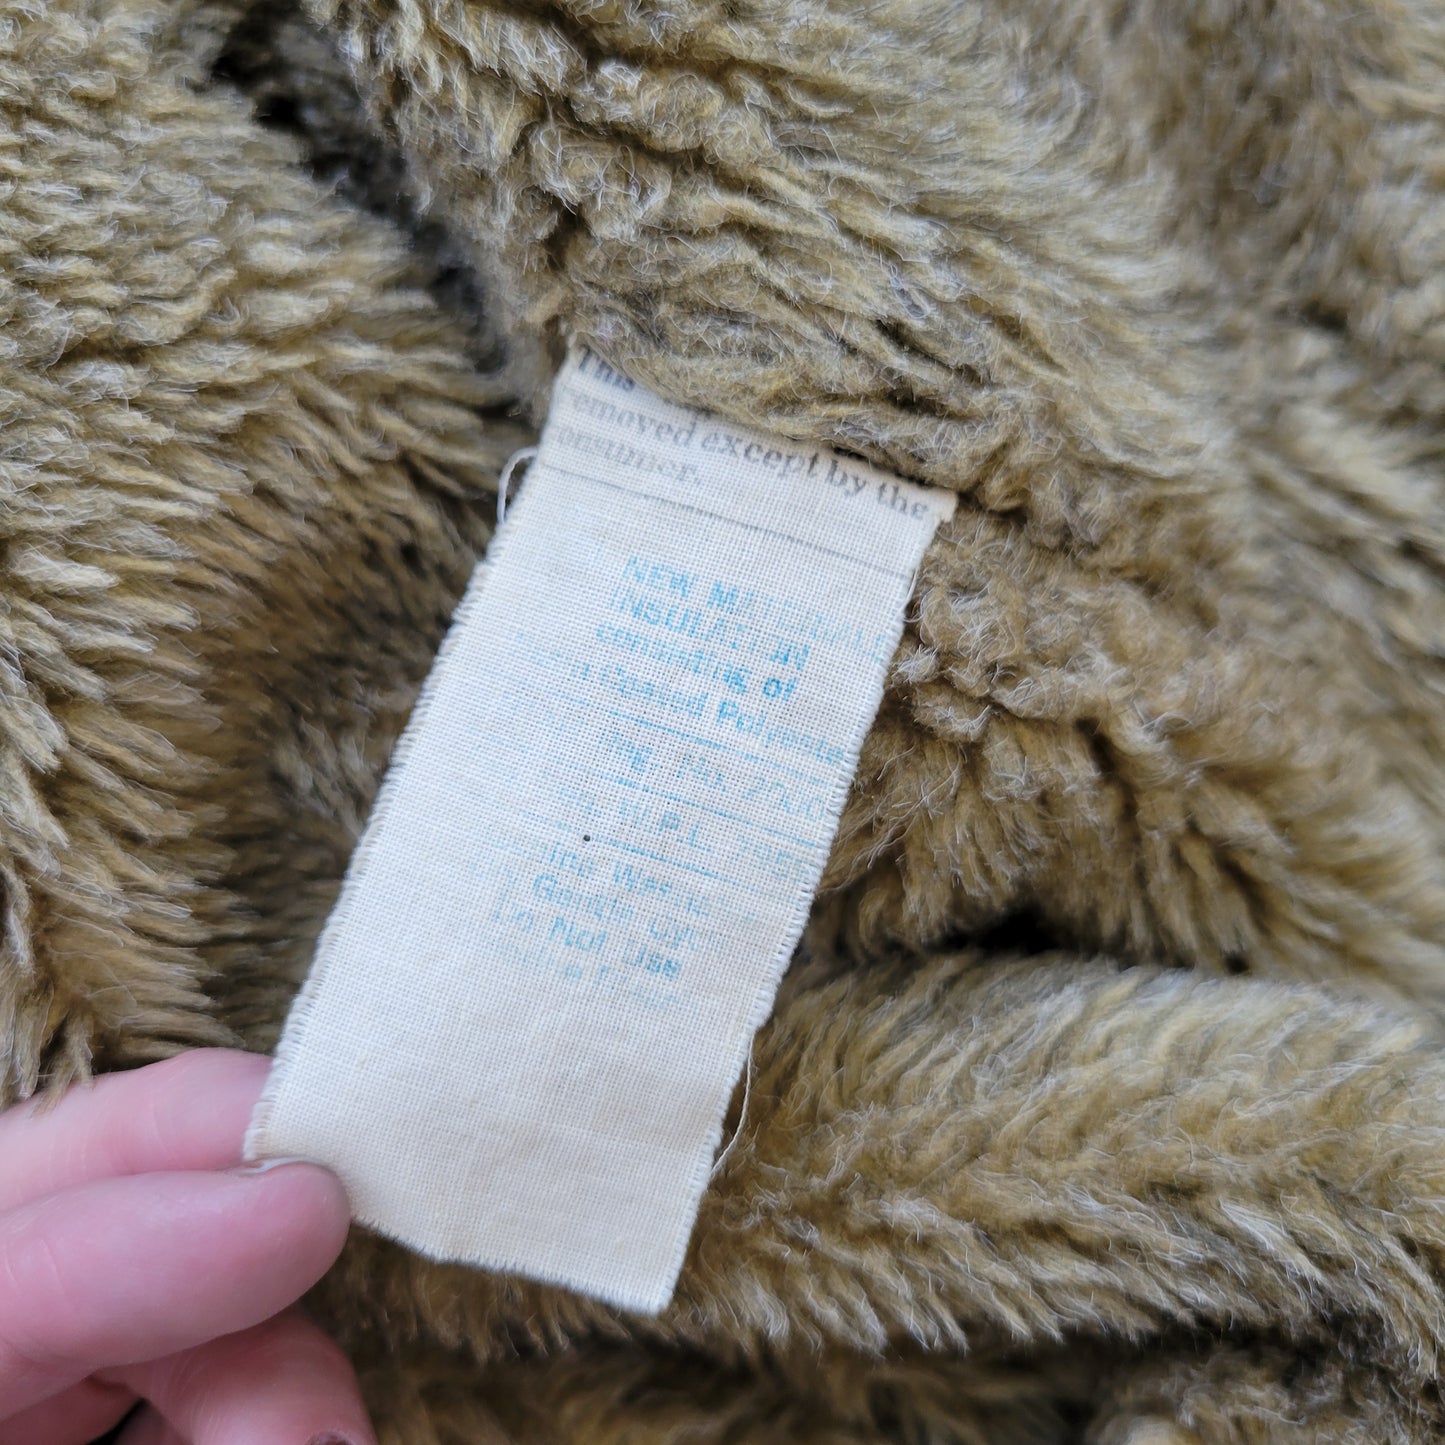 Field & Stream Gordon and Ferguson Co Vintage Fur Lined Bomber Jacket - medium